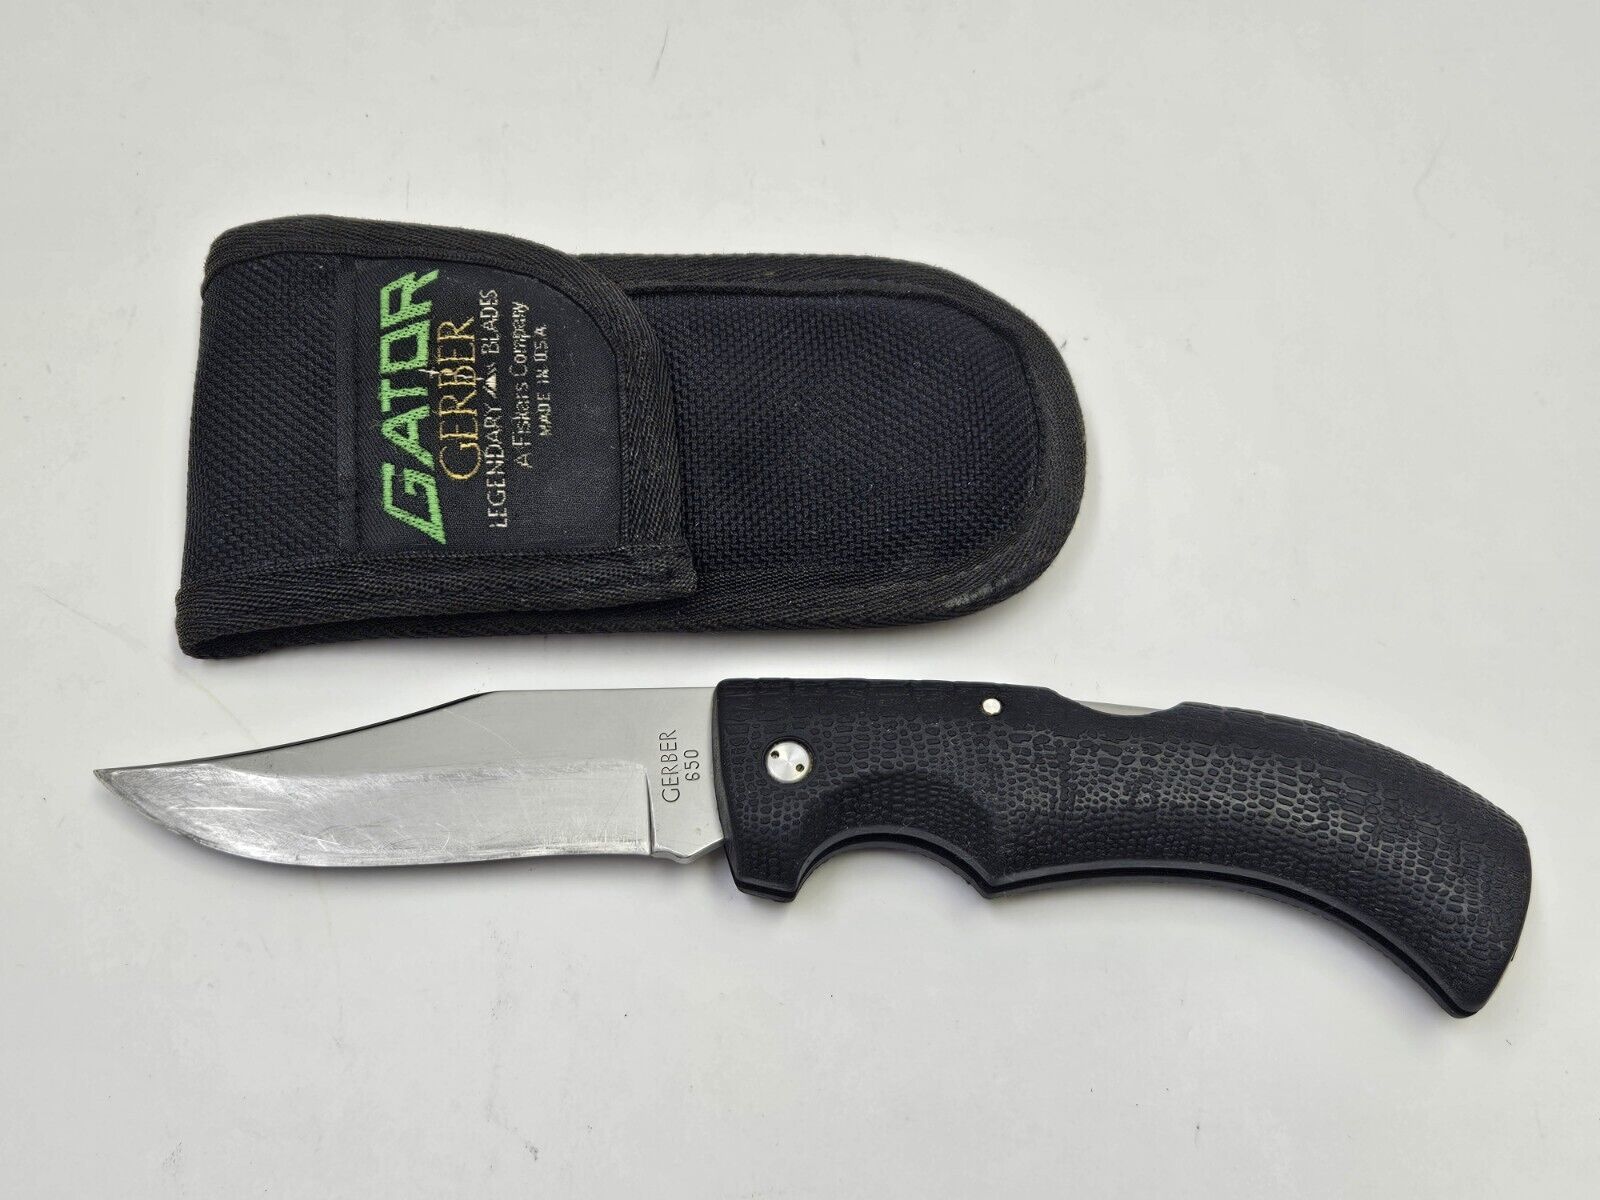 Gerber Gator 650 Lockback Folding Knife Portland OR USA With Sheath Holster